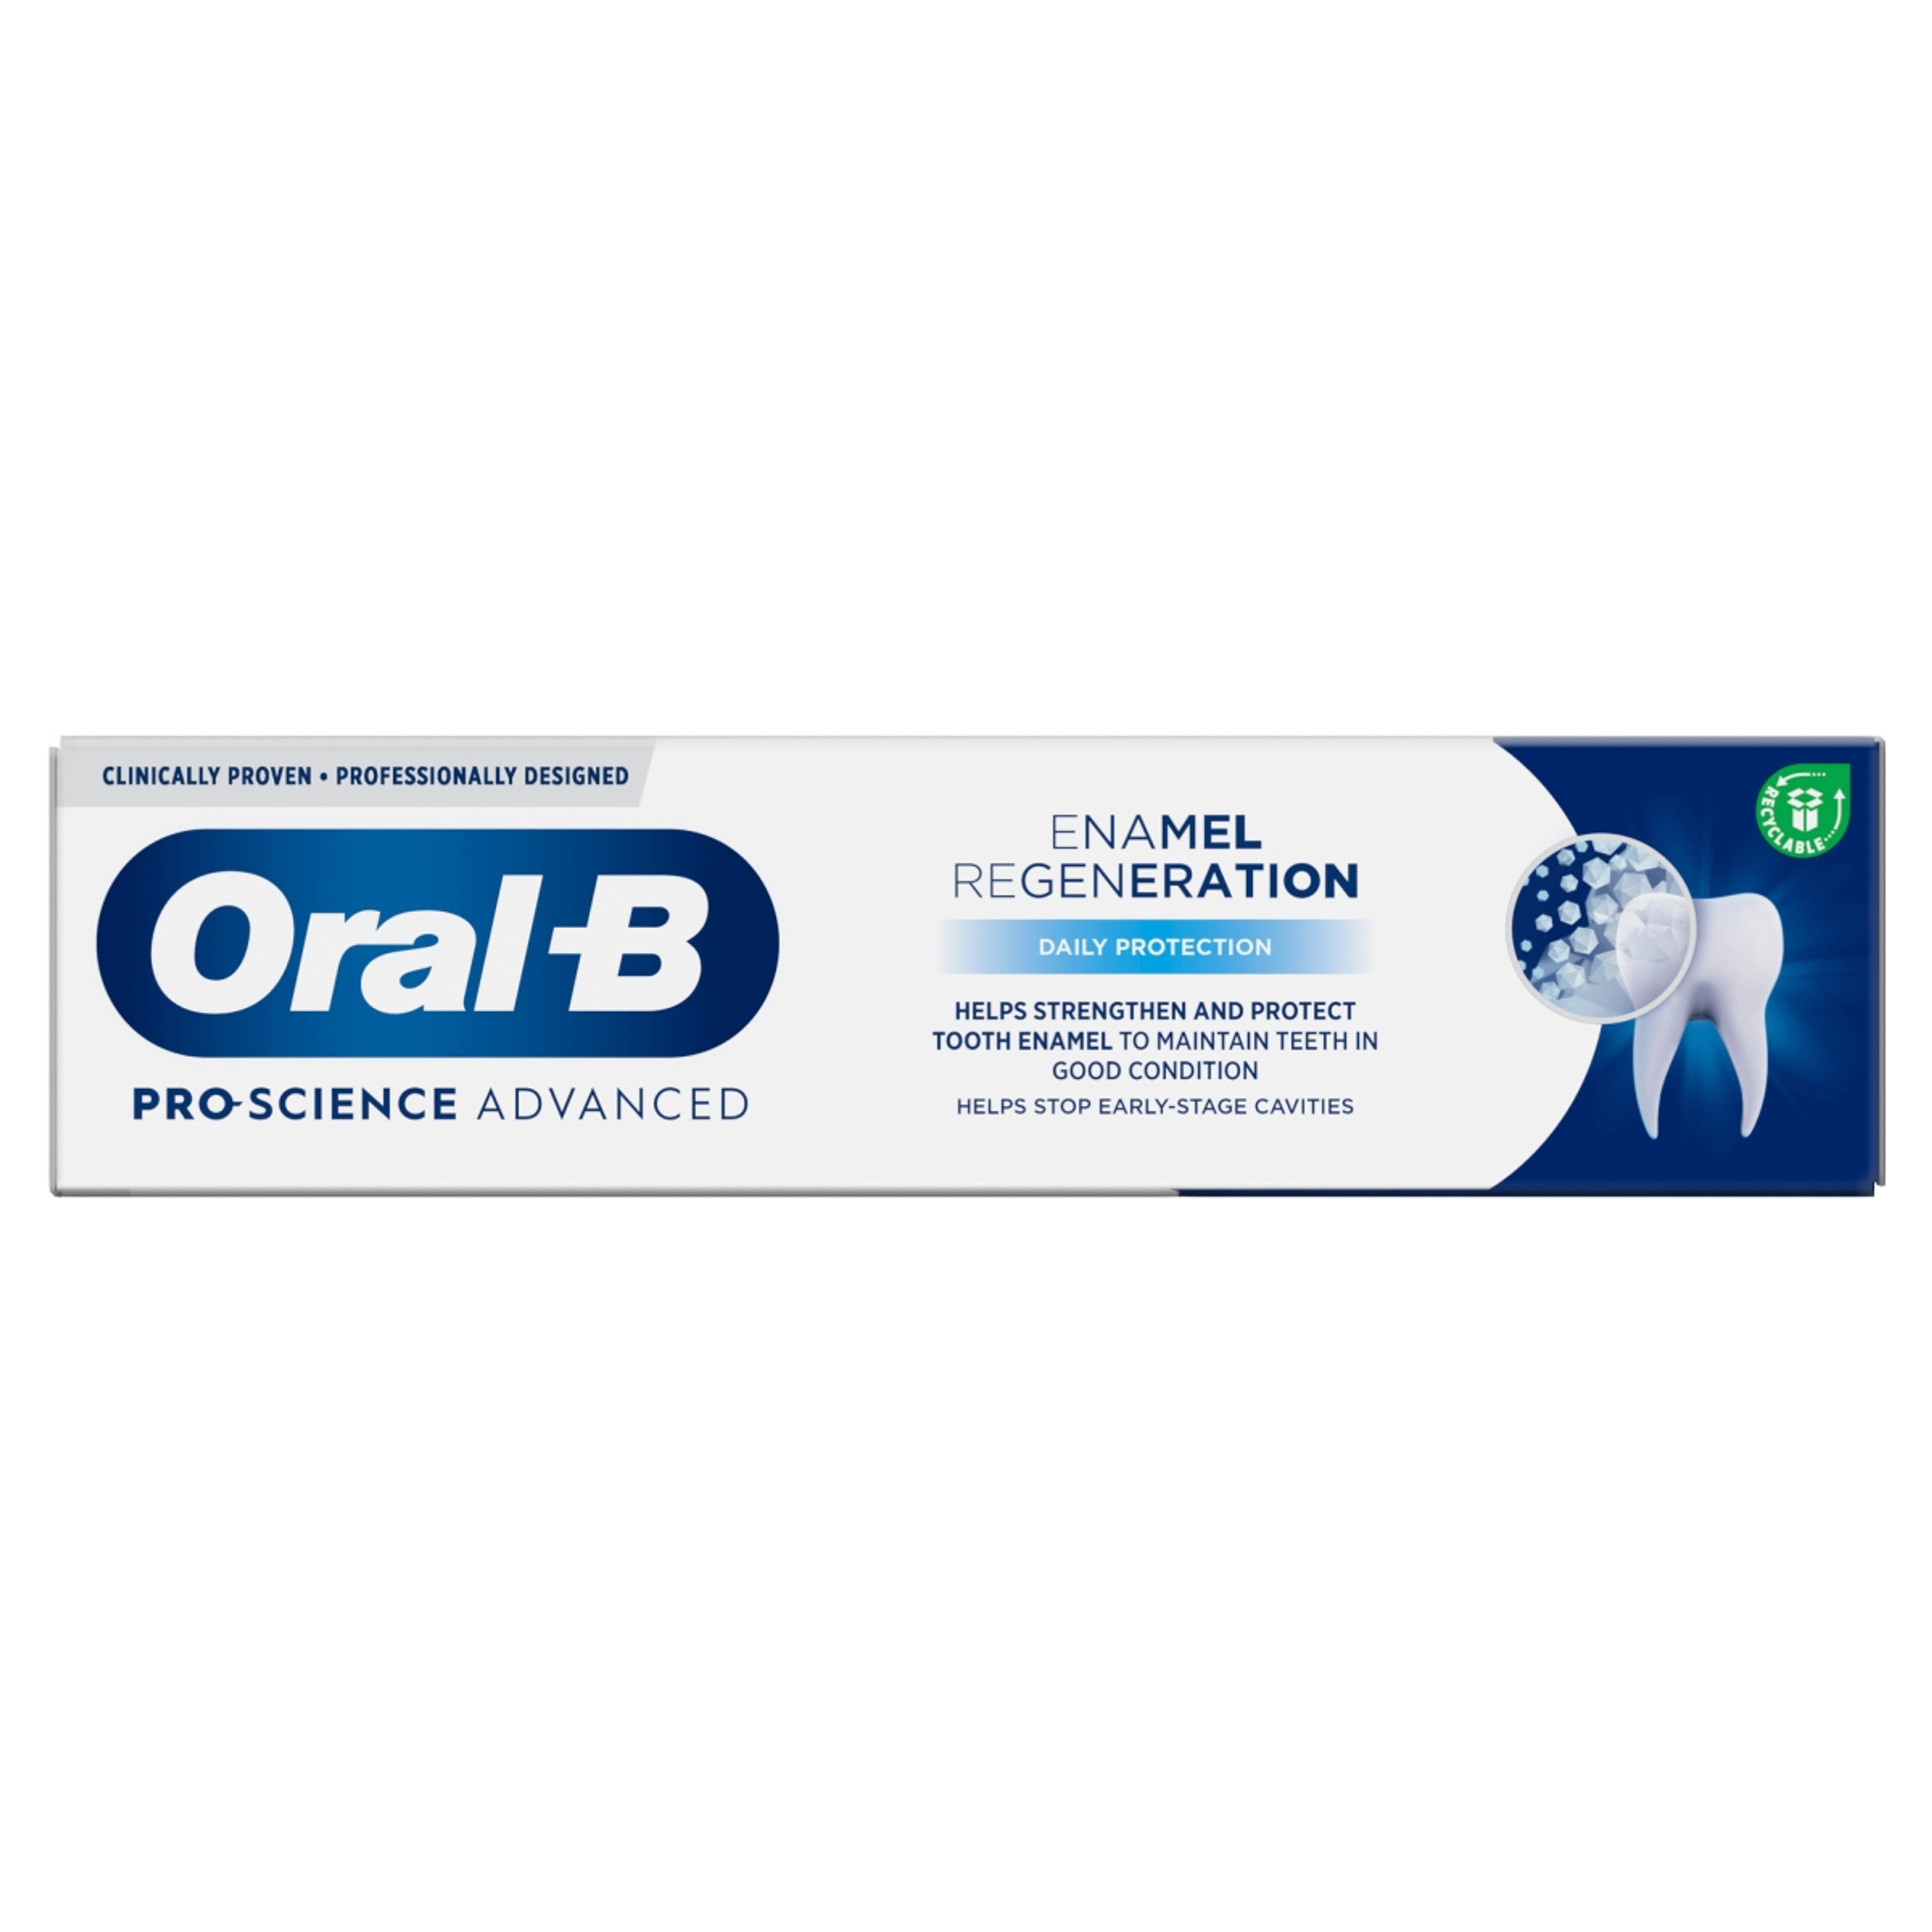 Oral-B Professional Regenerate Enamel Daily Protection fogkrém - 75 ml